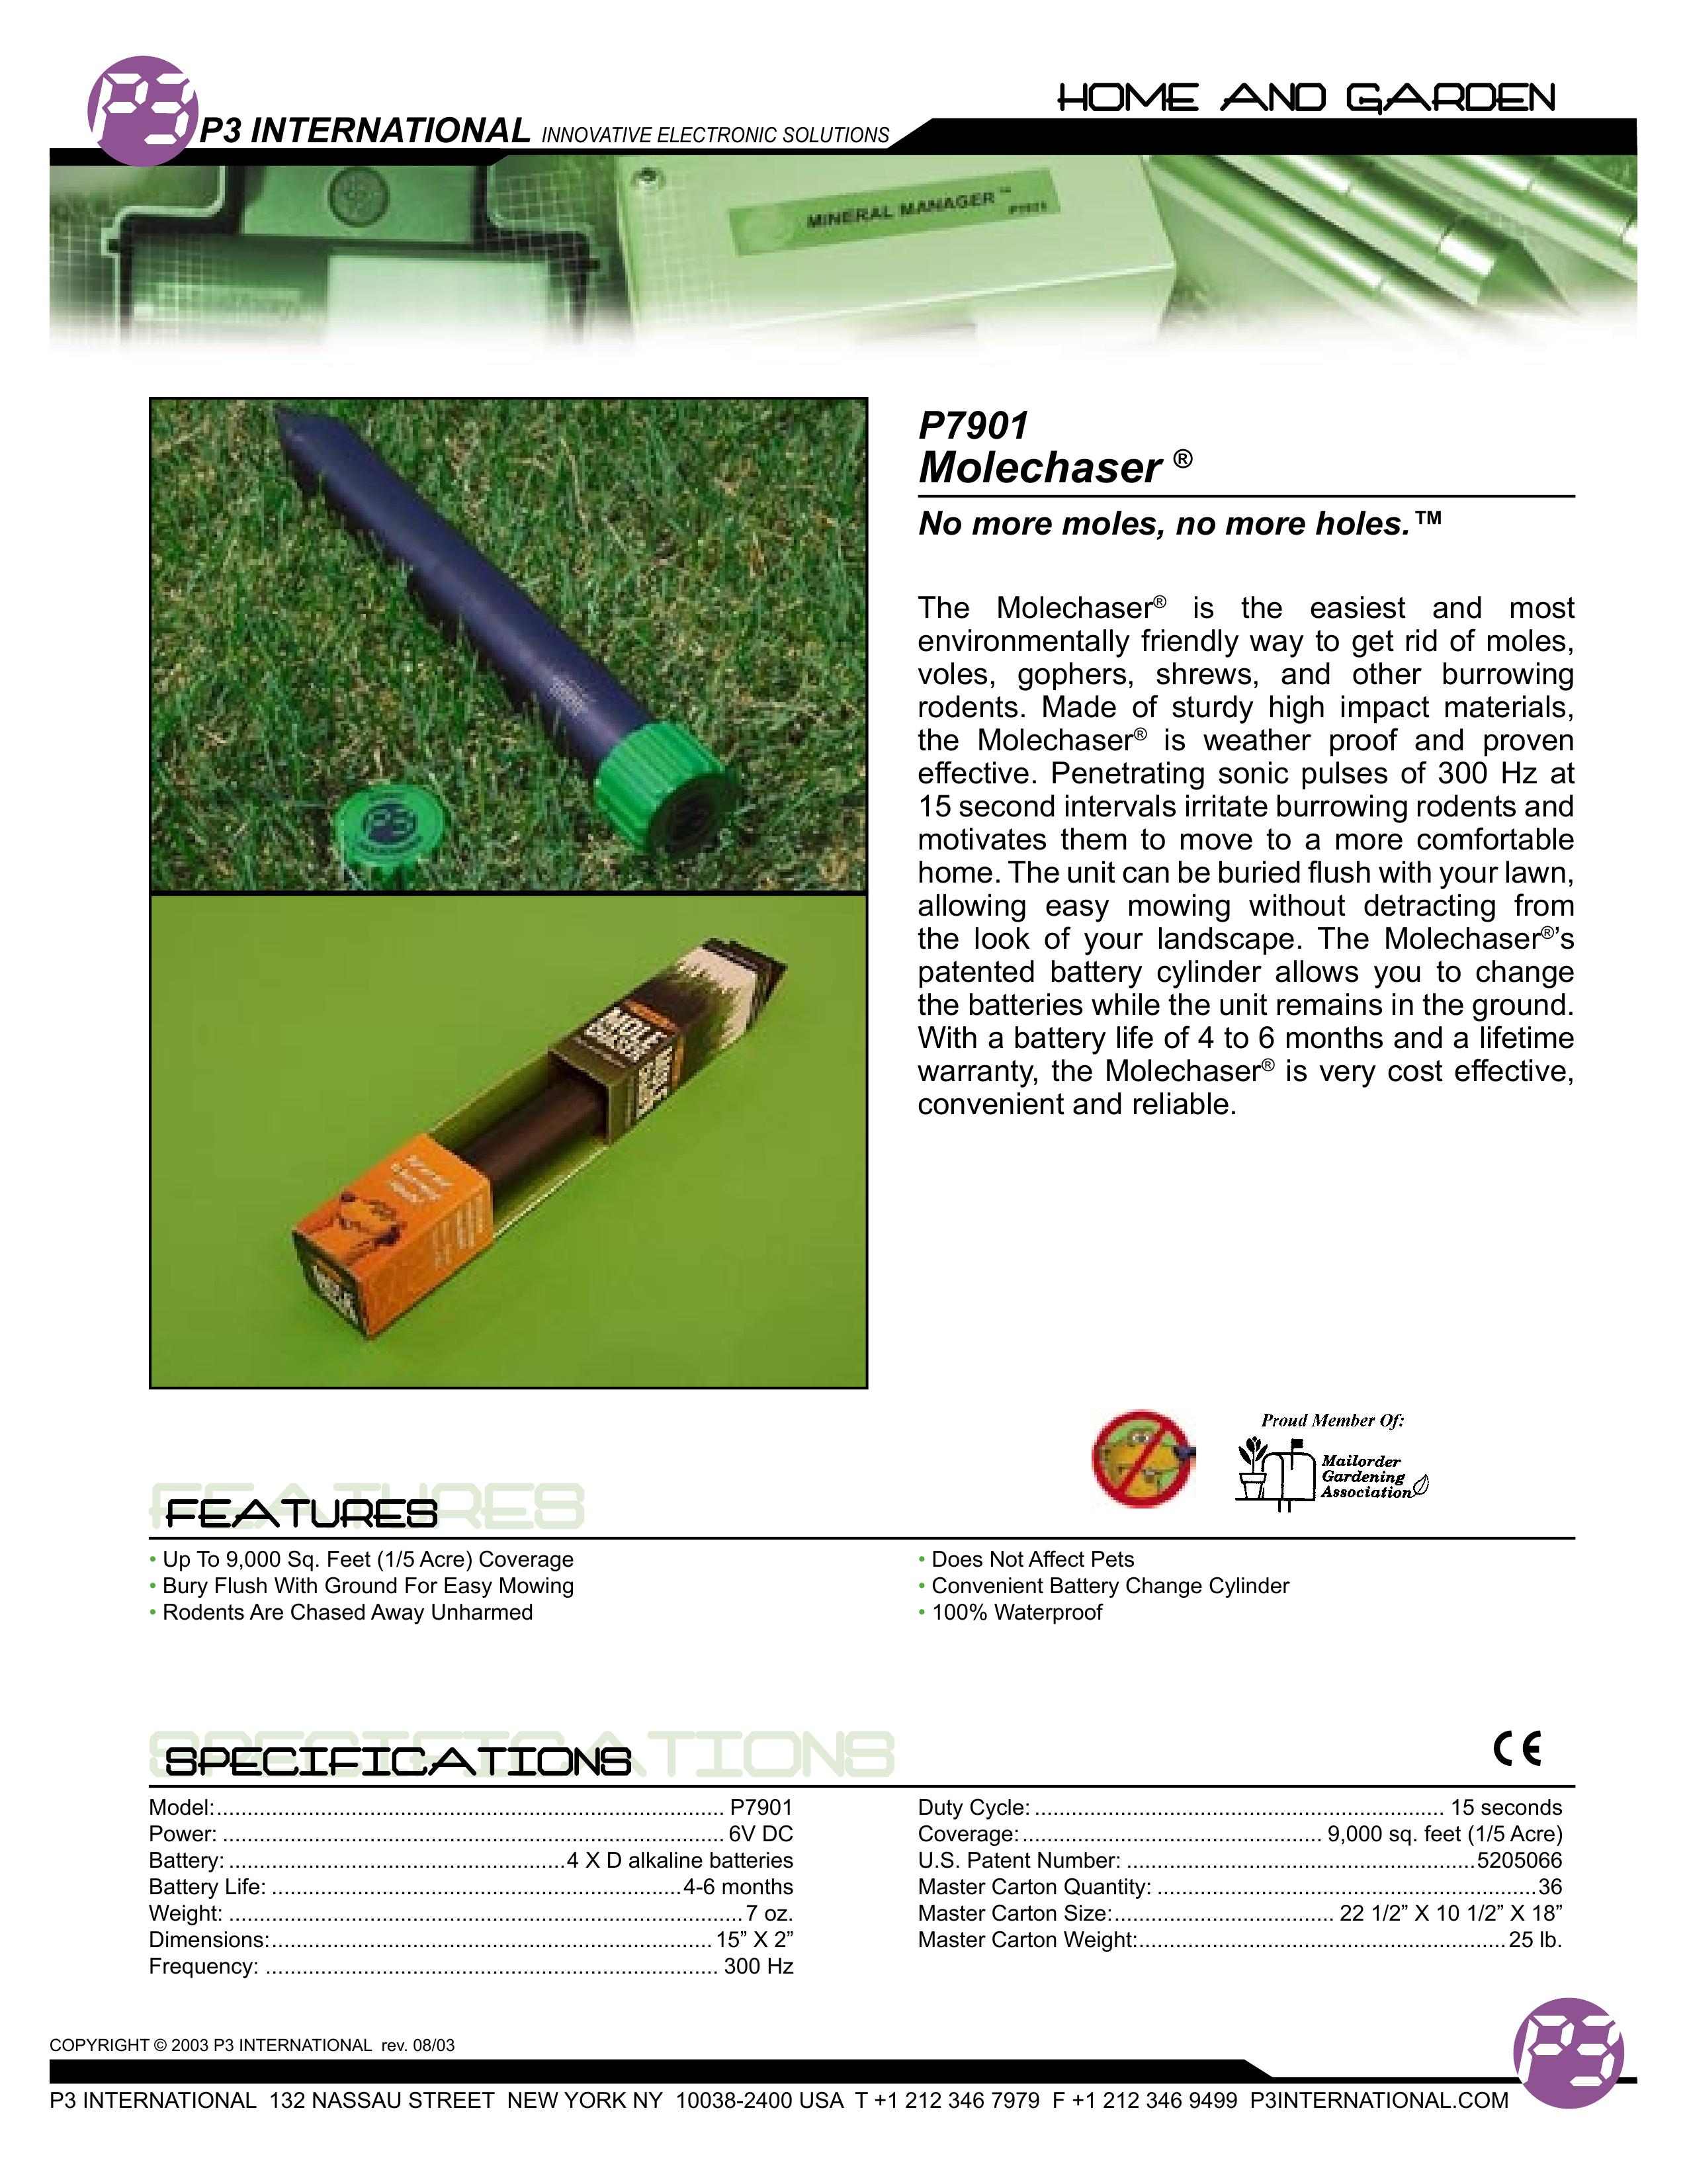 P3 International P7901 Pest Control Equipment User Manual